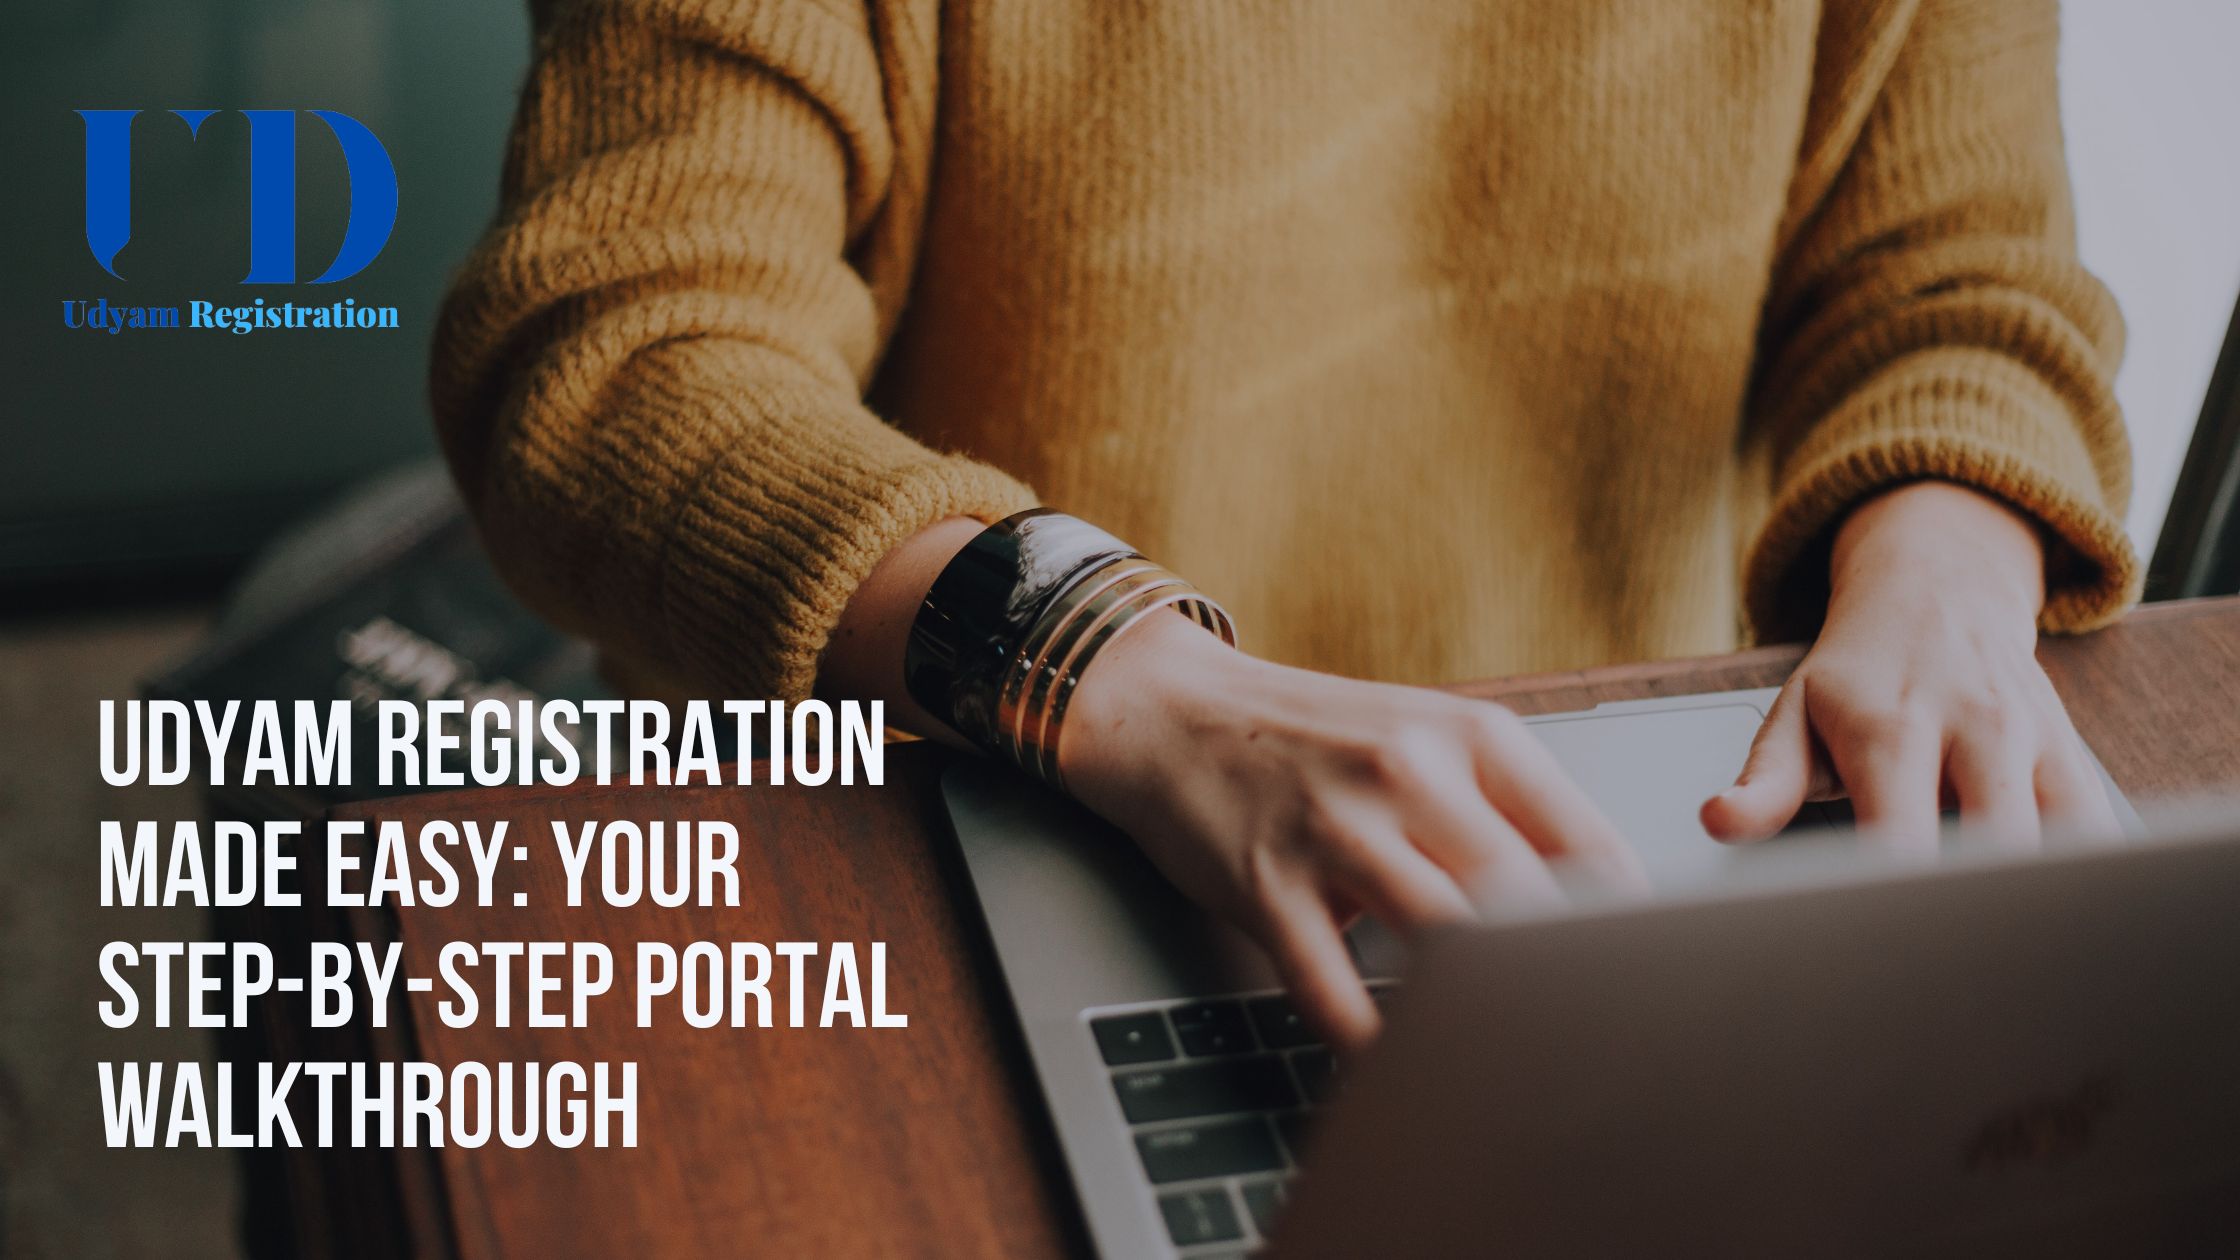 Udyam Registration Made Easy: Your Step-by-Step Portal Walkthrough